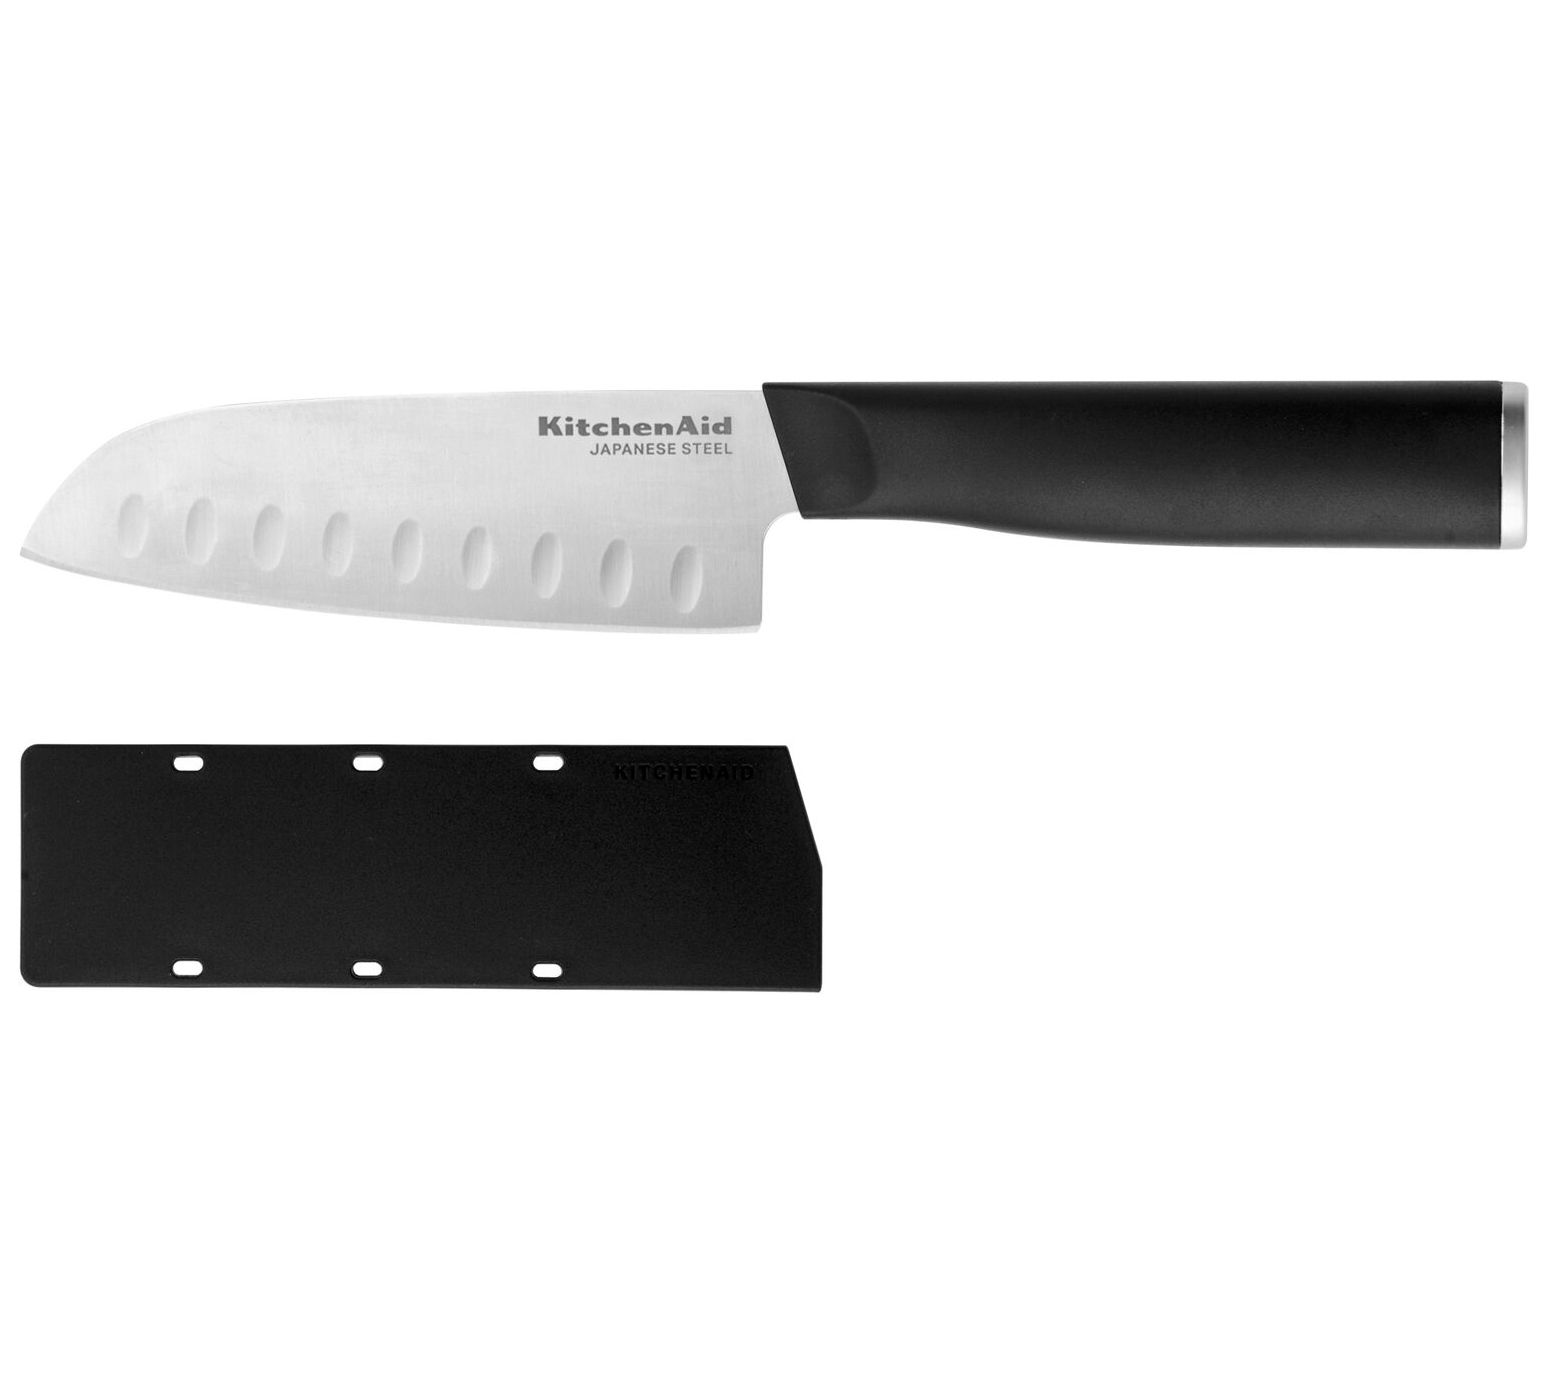  MAD SHARK Chef Knife, Professional 8 Inch Santoku